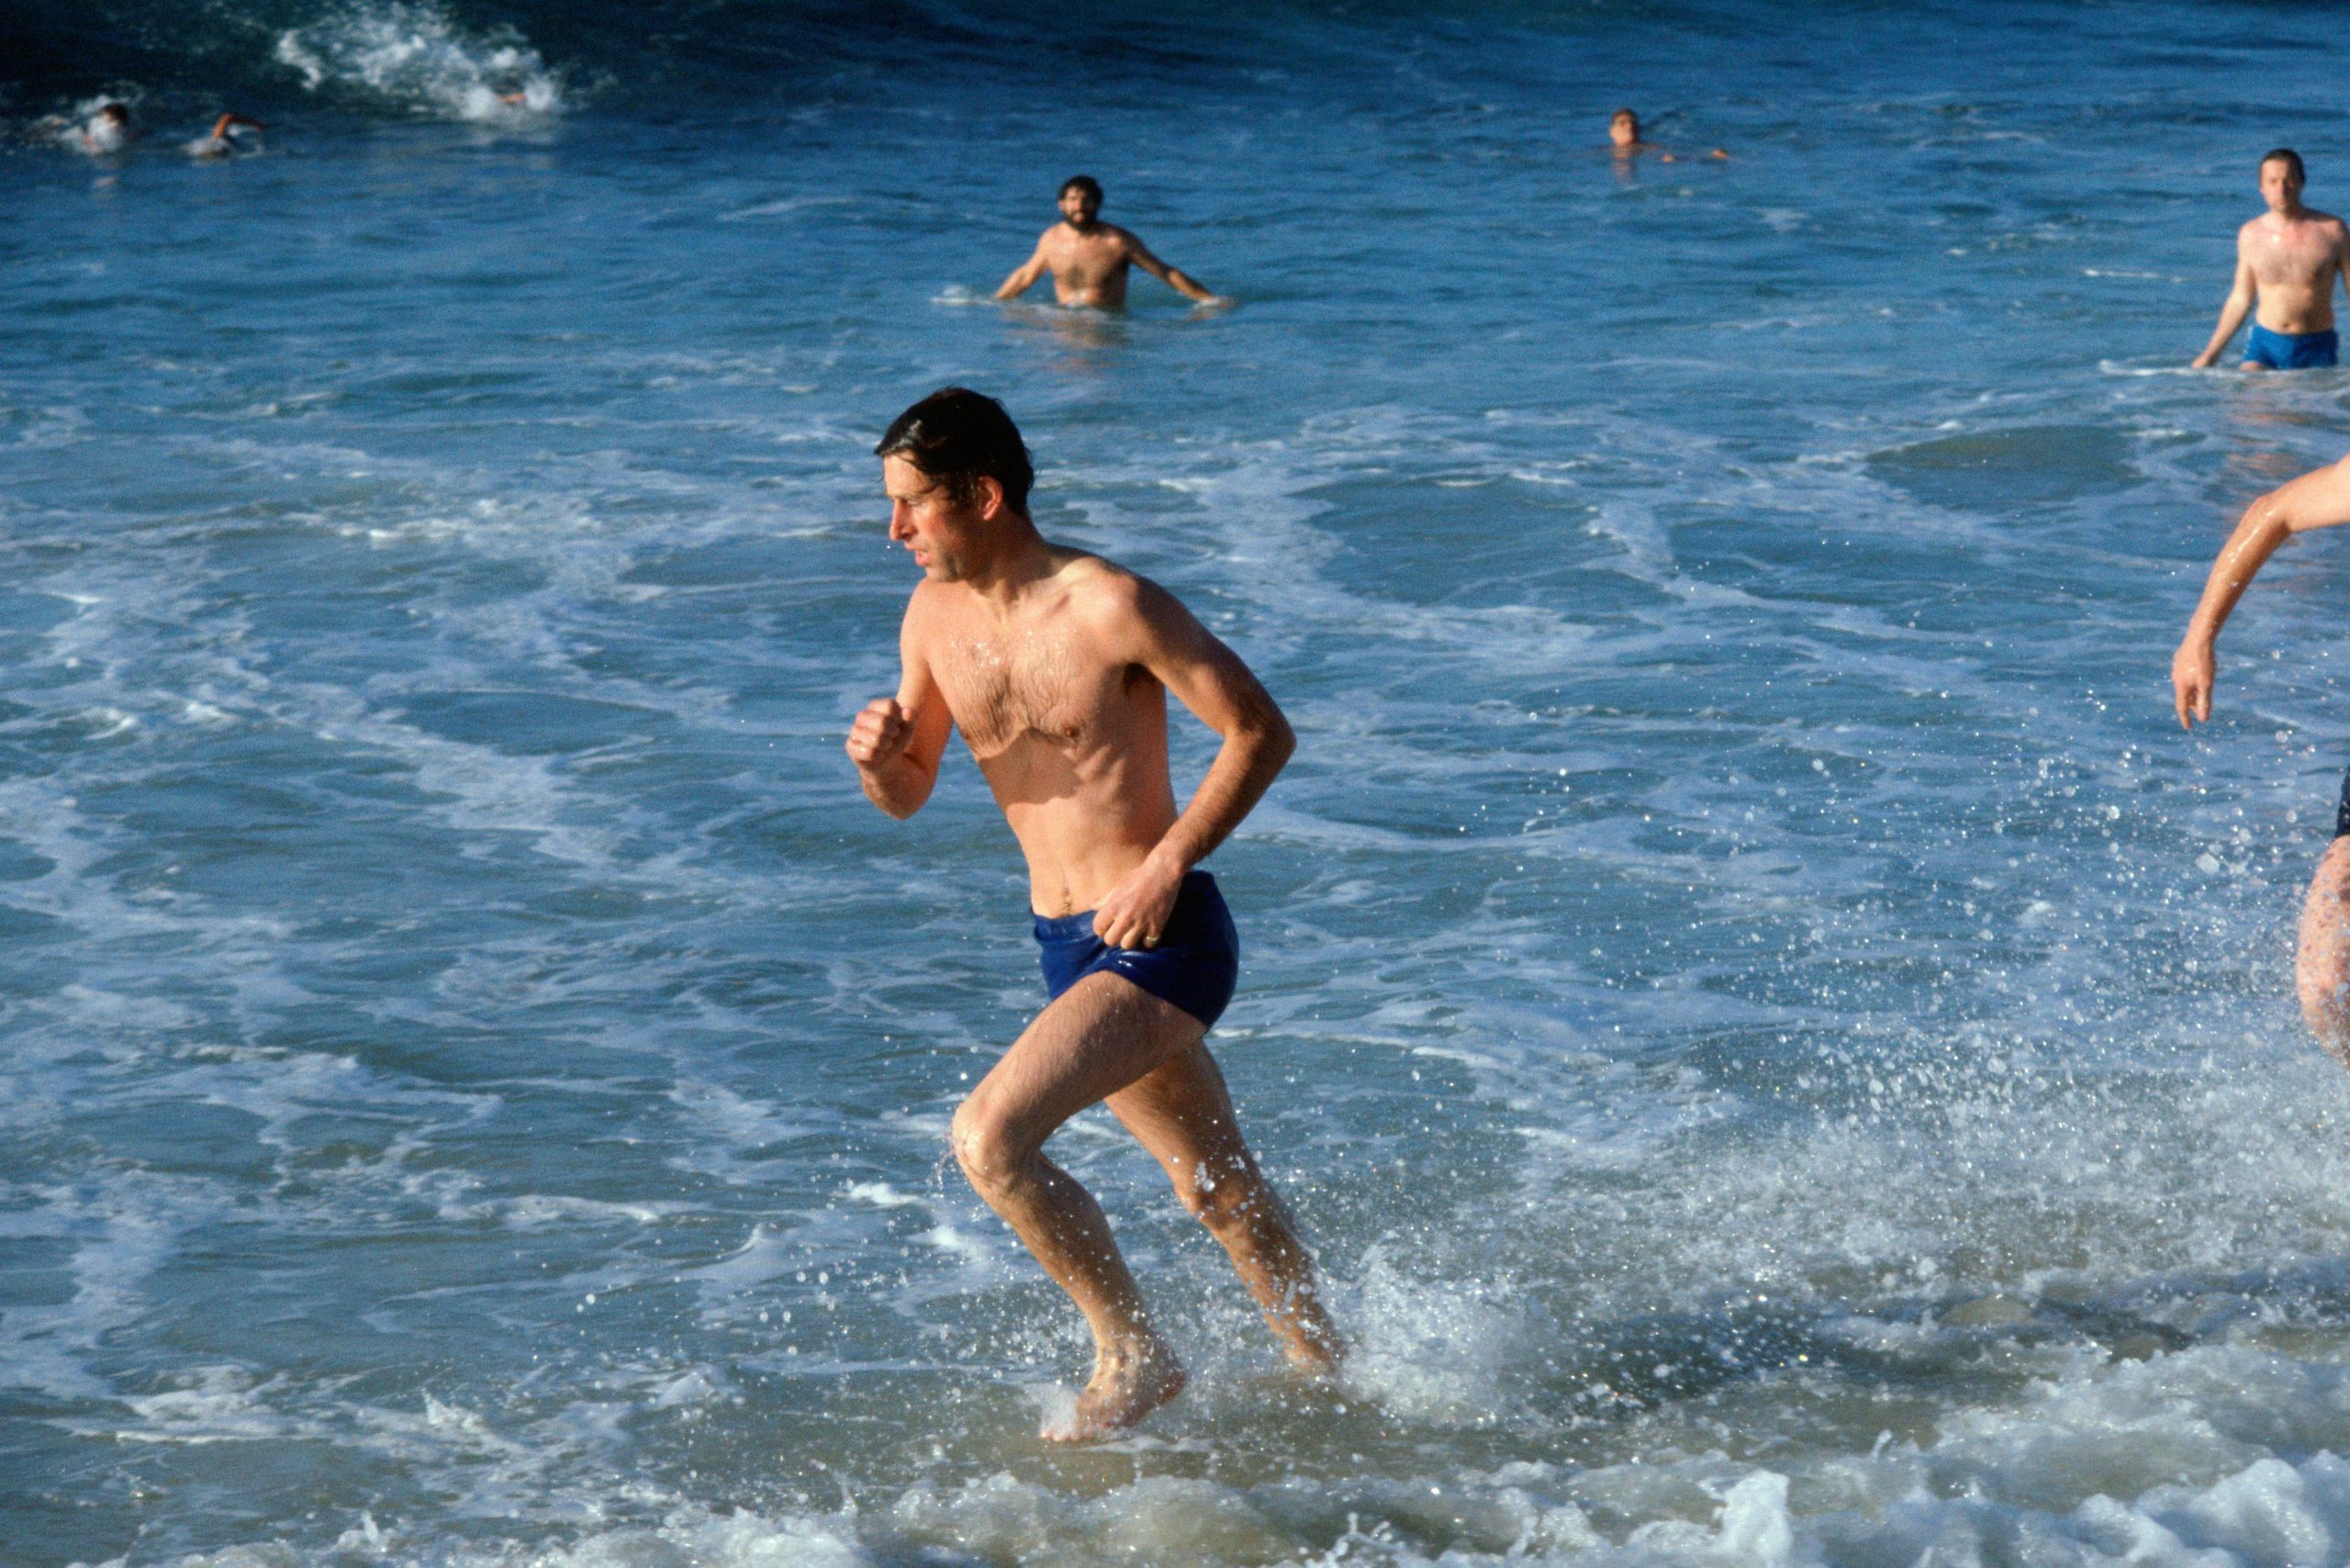 Prince Charles, Prince of Wales in the sea at Bondi Beach